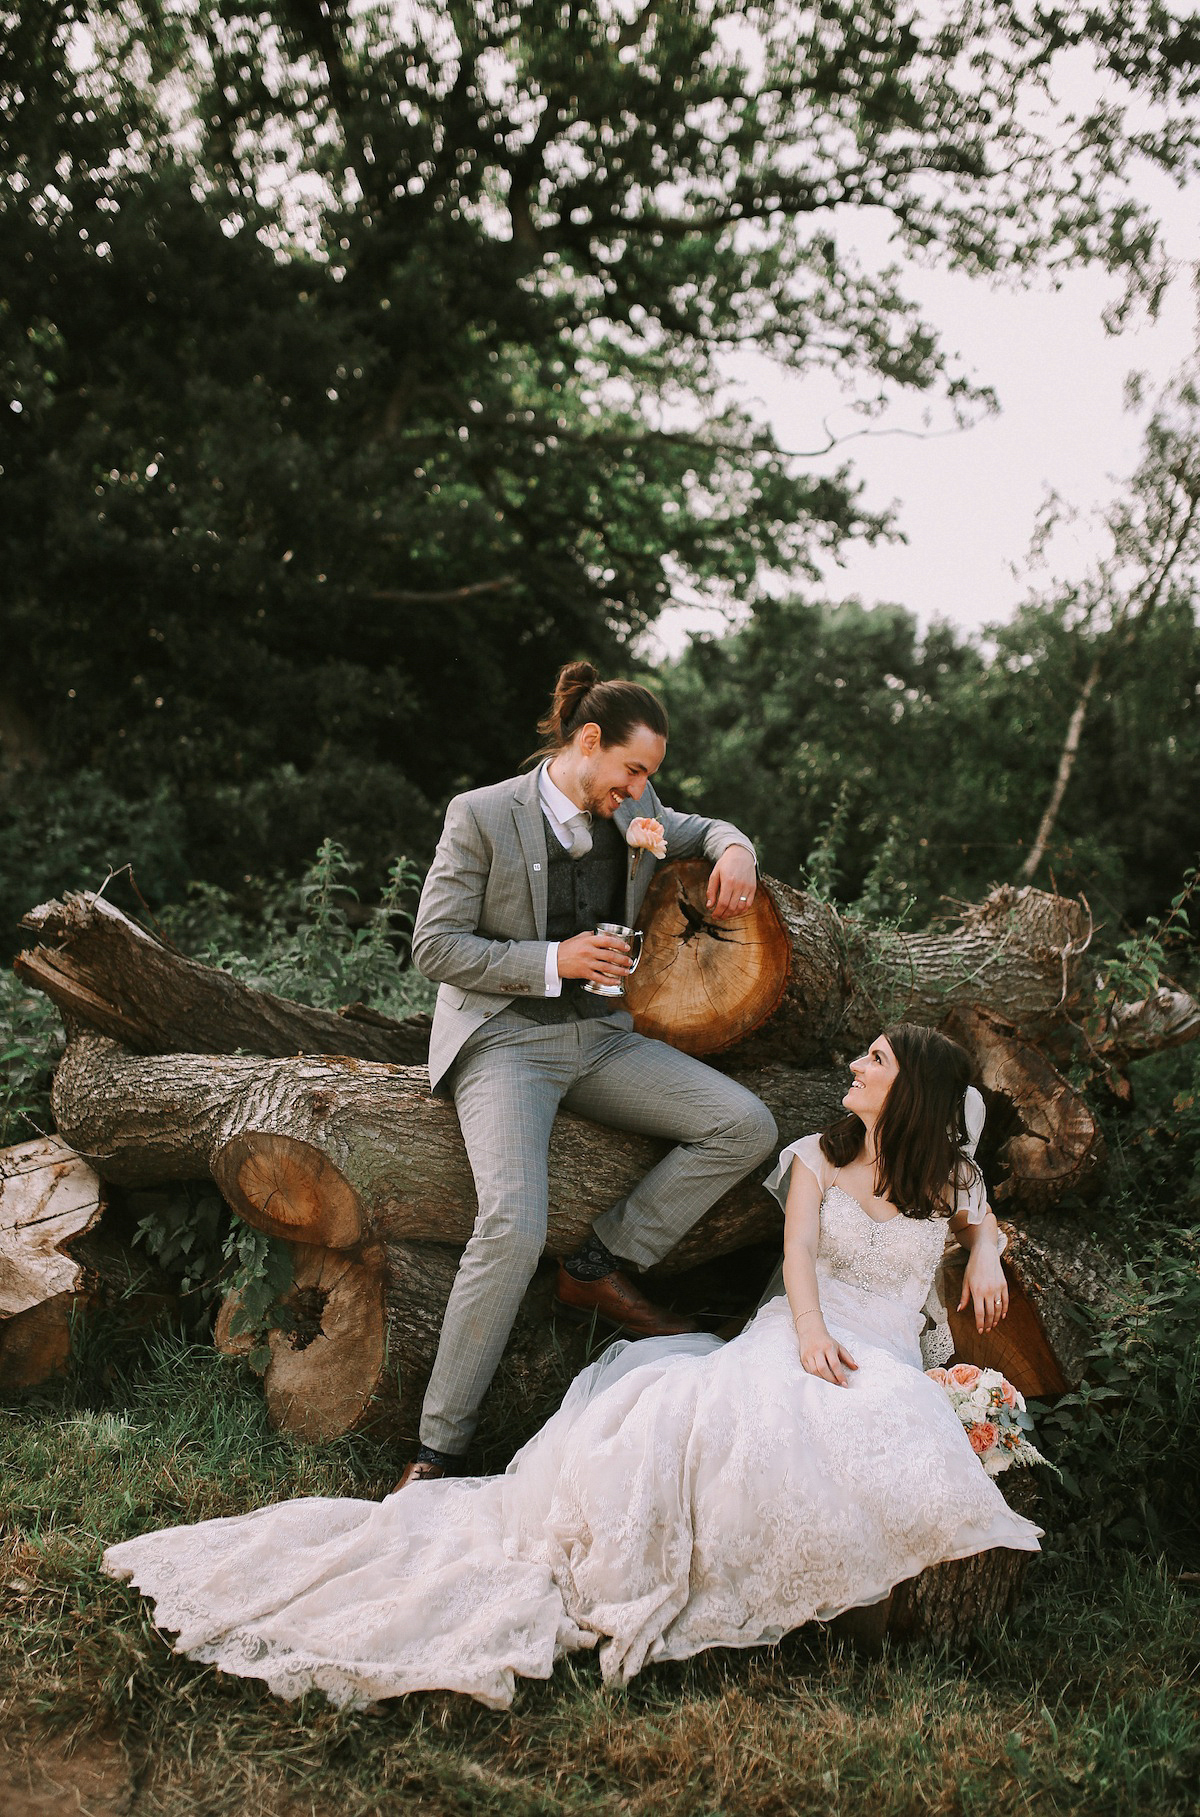 A festival inspired farm wedding in shades of peach. Photography by Rosie Hardy and Adam Bird.